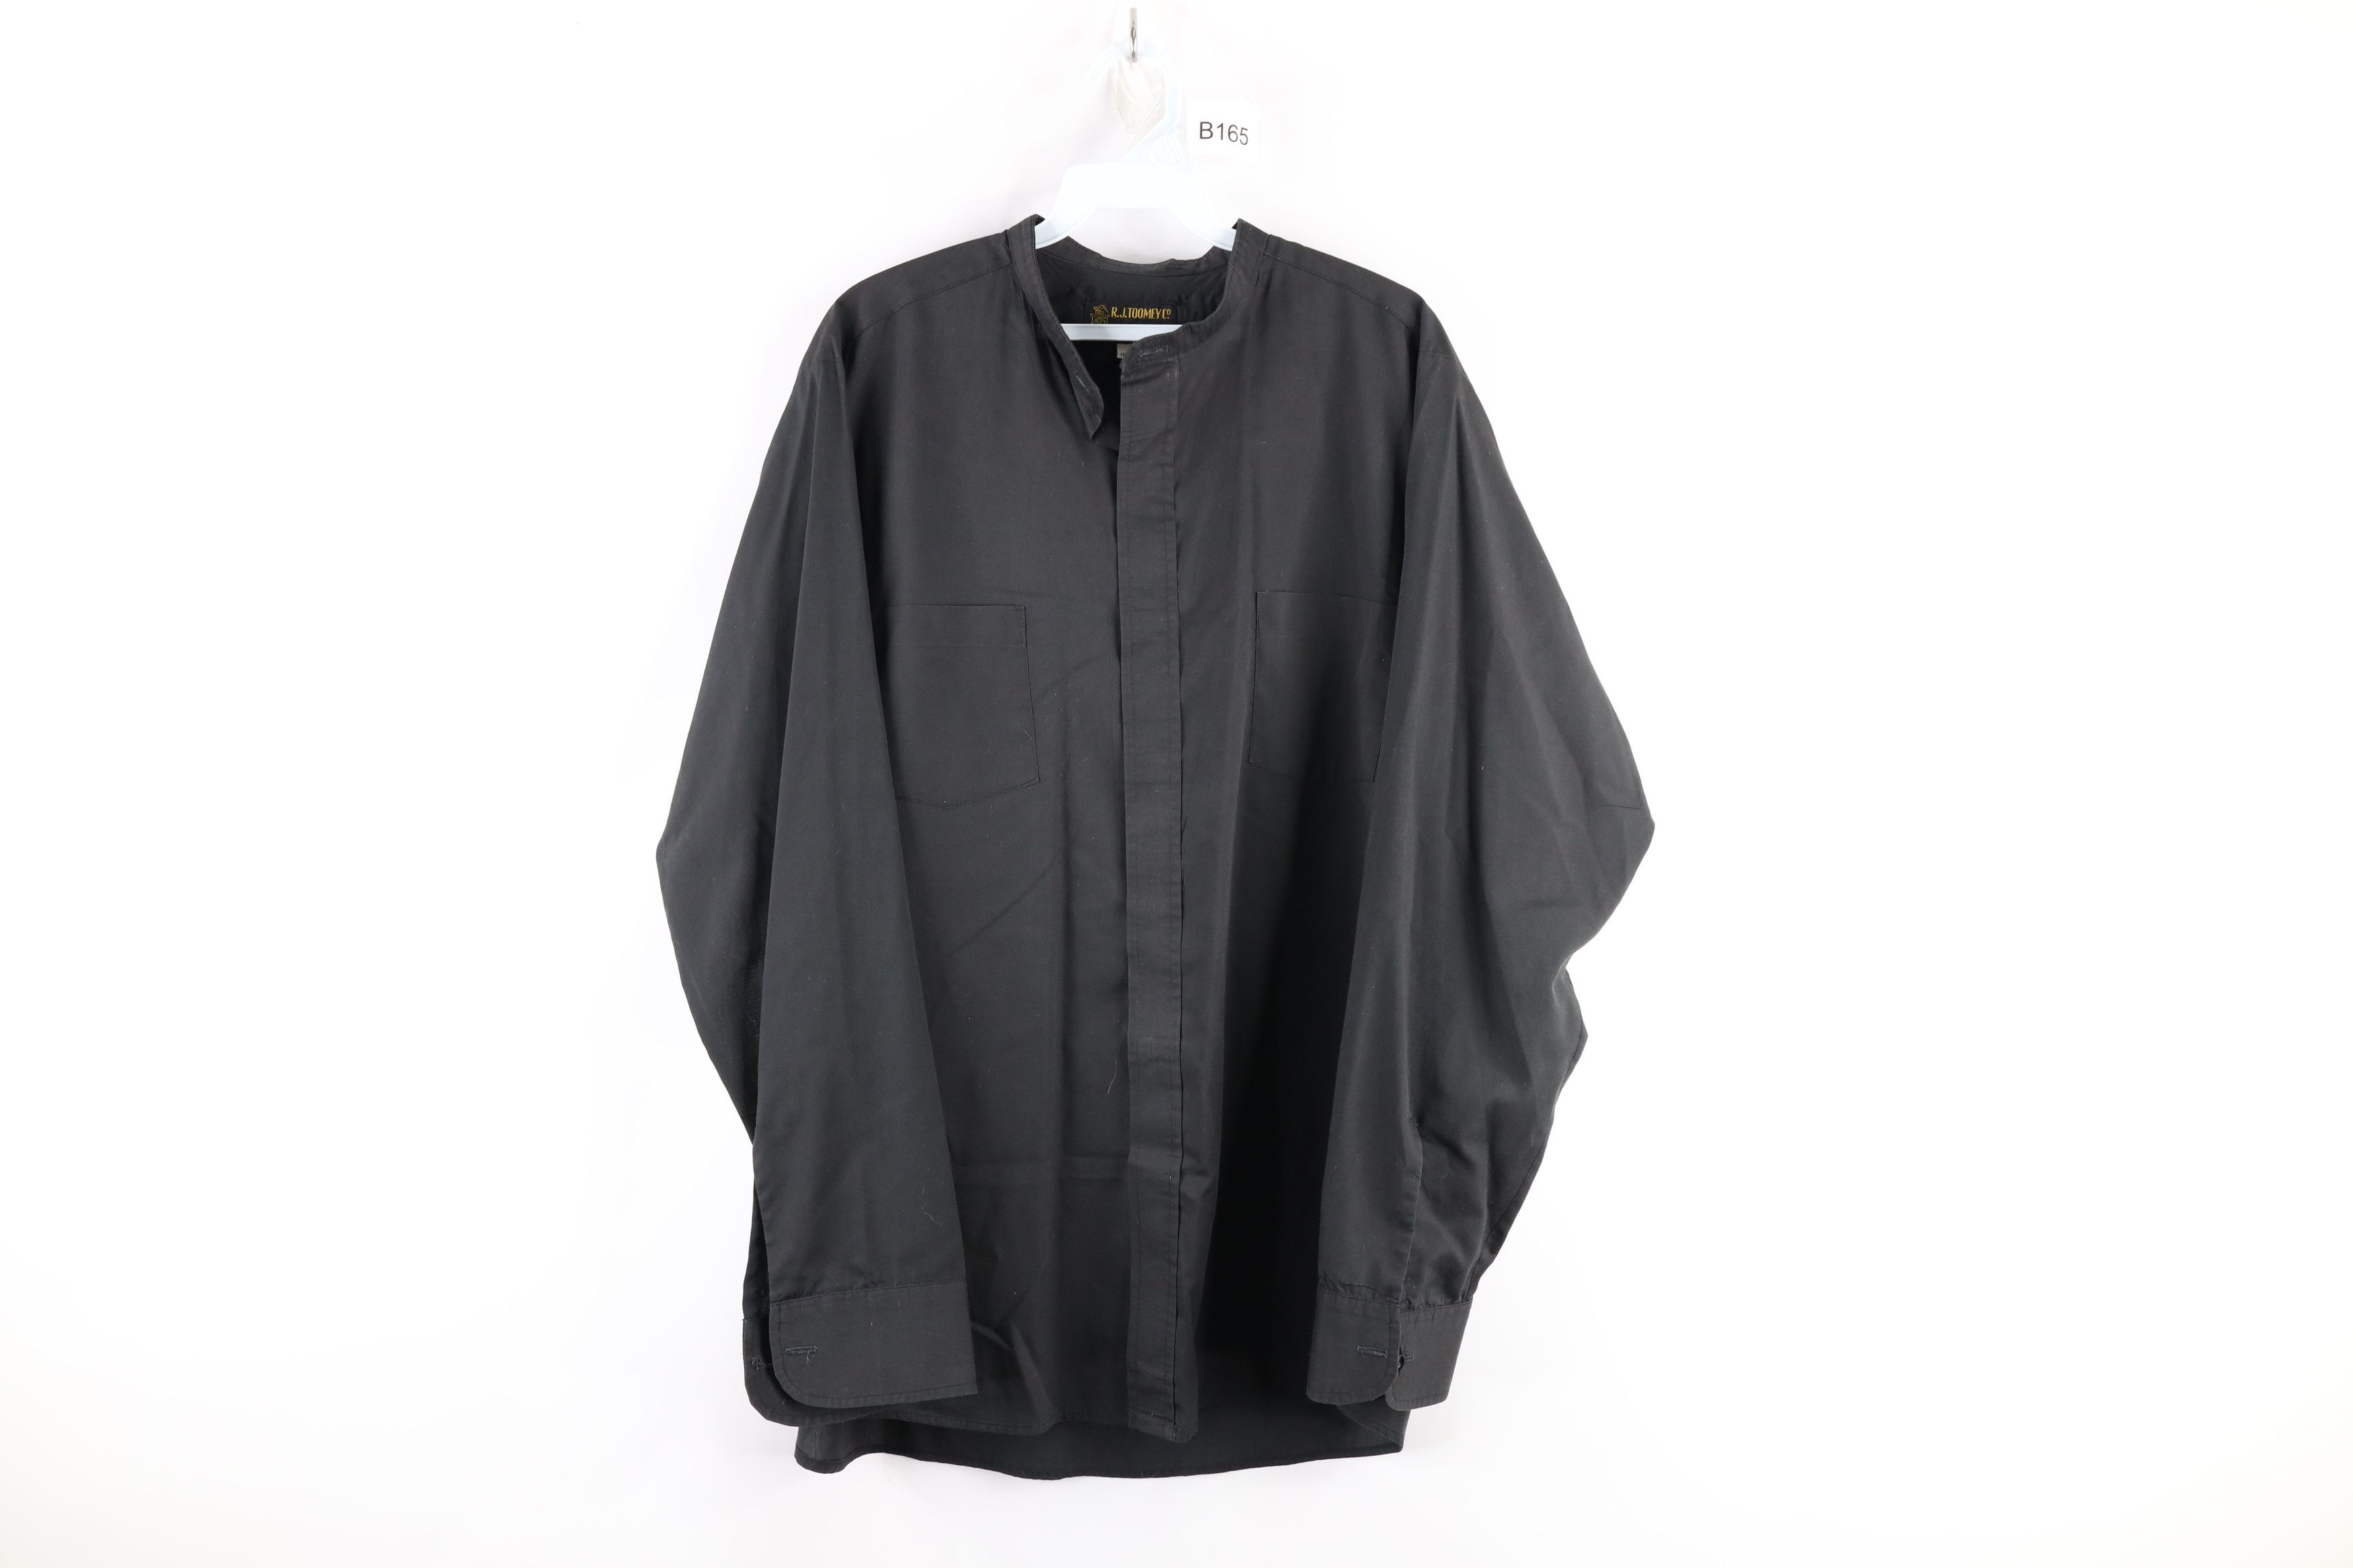 Vintage Vintage 90s Streetwear Banded Collar Button Shirt Black USA Size US L / EU 52-54 / 3 - 1 Preview